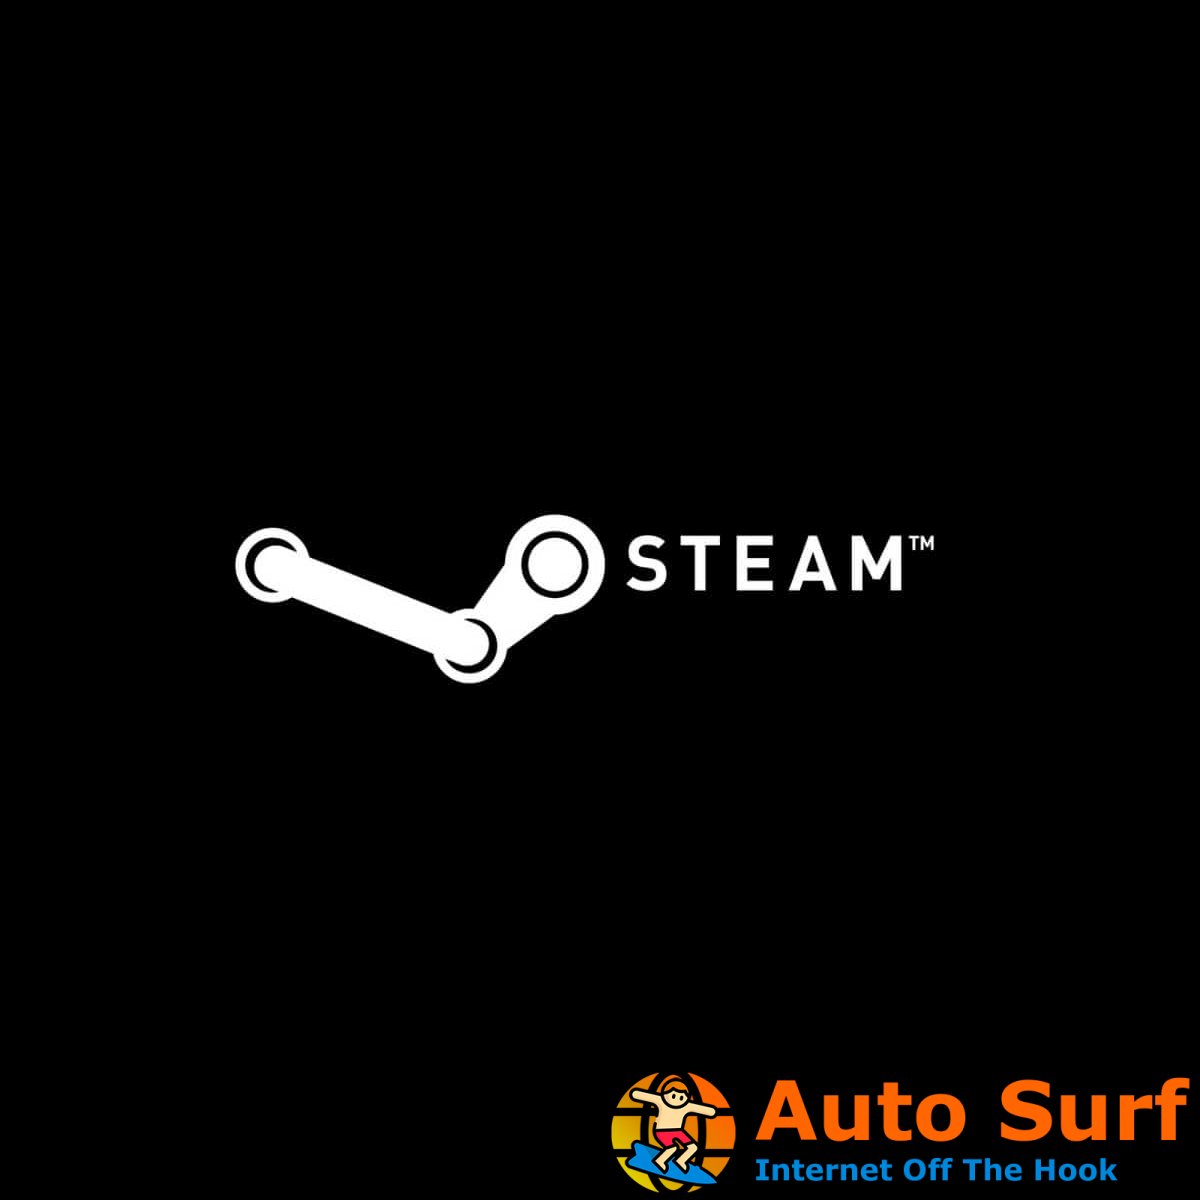 Requisitos mínimos no cumplidos Steam